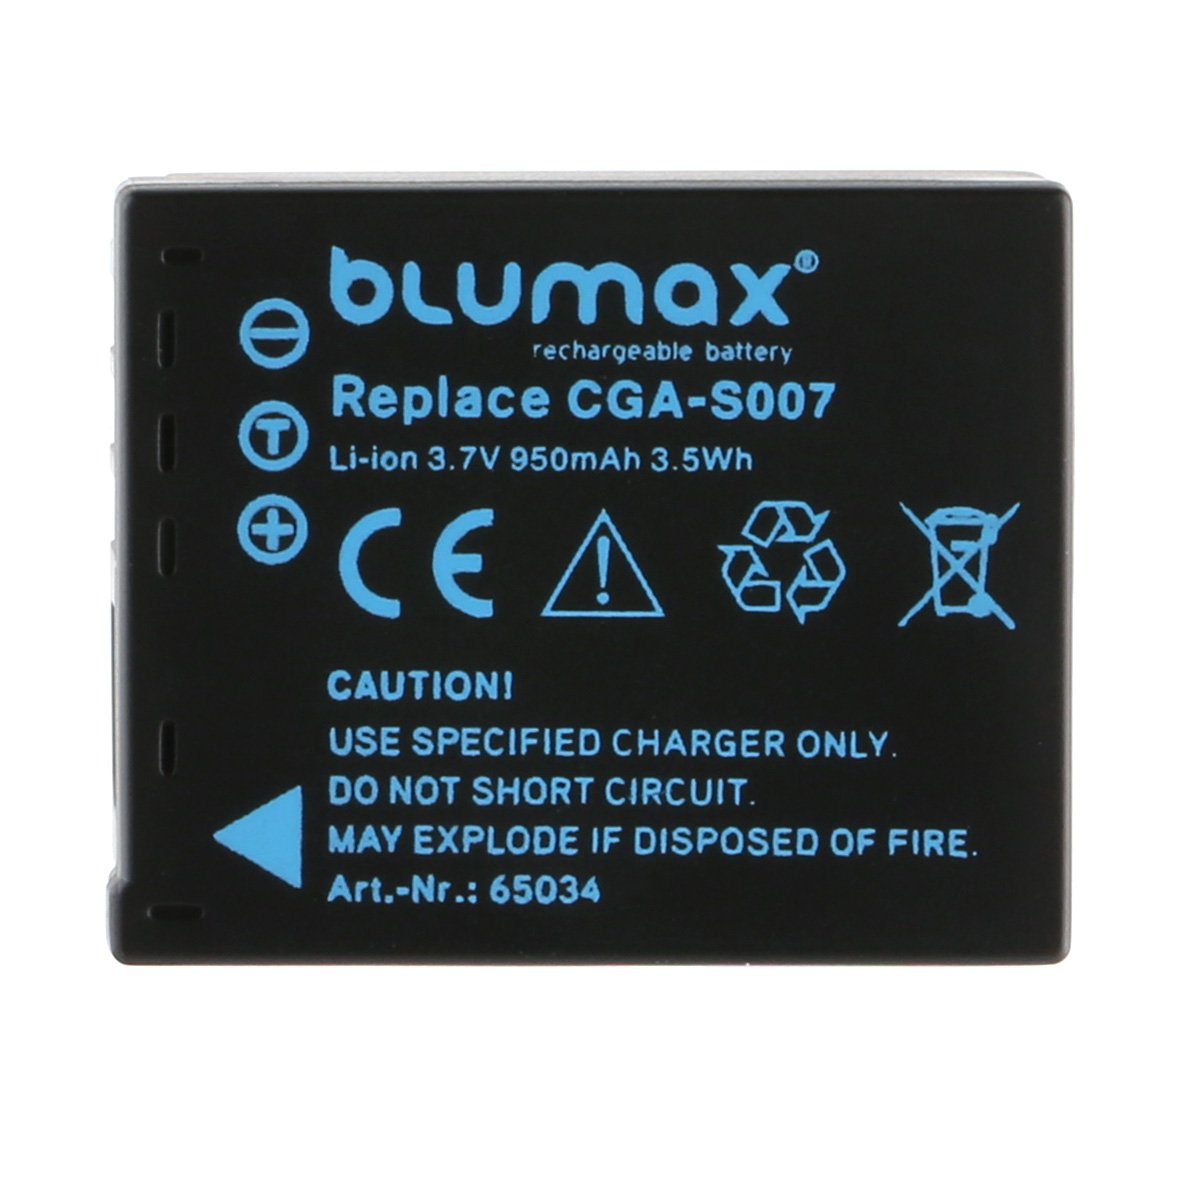 mAh passend Akku (3,6V) Panasonic CGR-S007 950 für Kamera-Akku Blumax